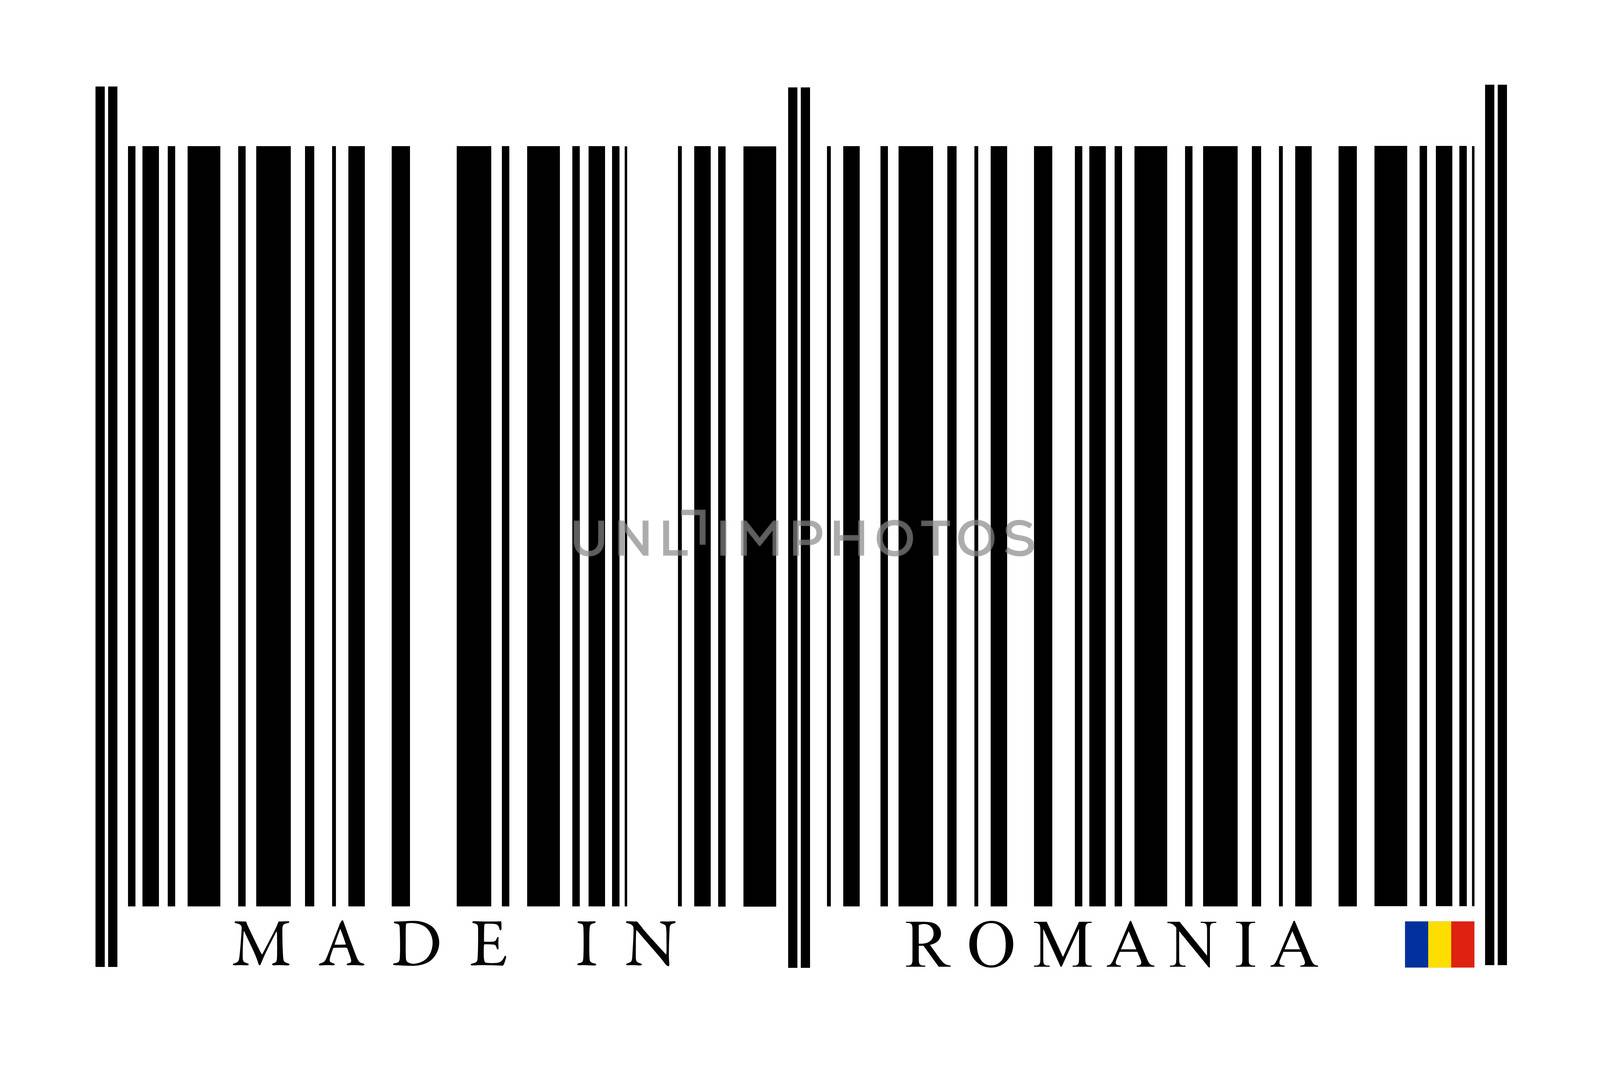 Romania Barcode by gemenacom